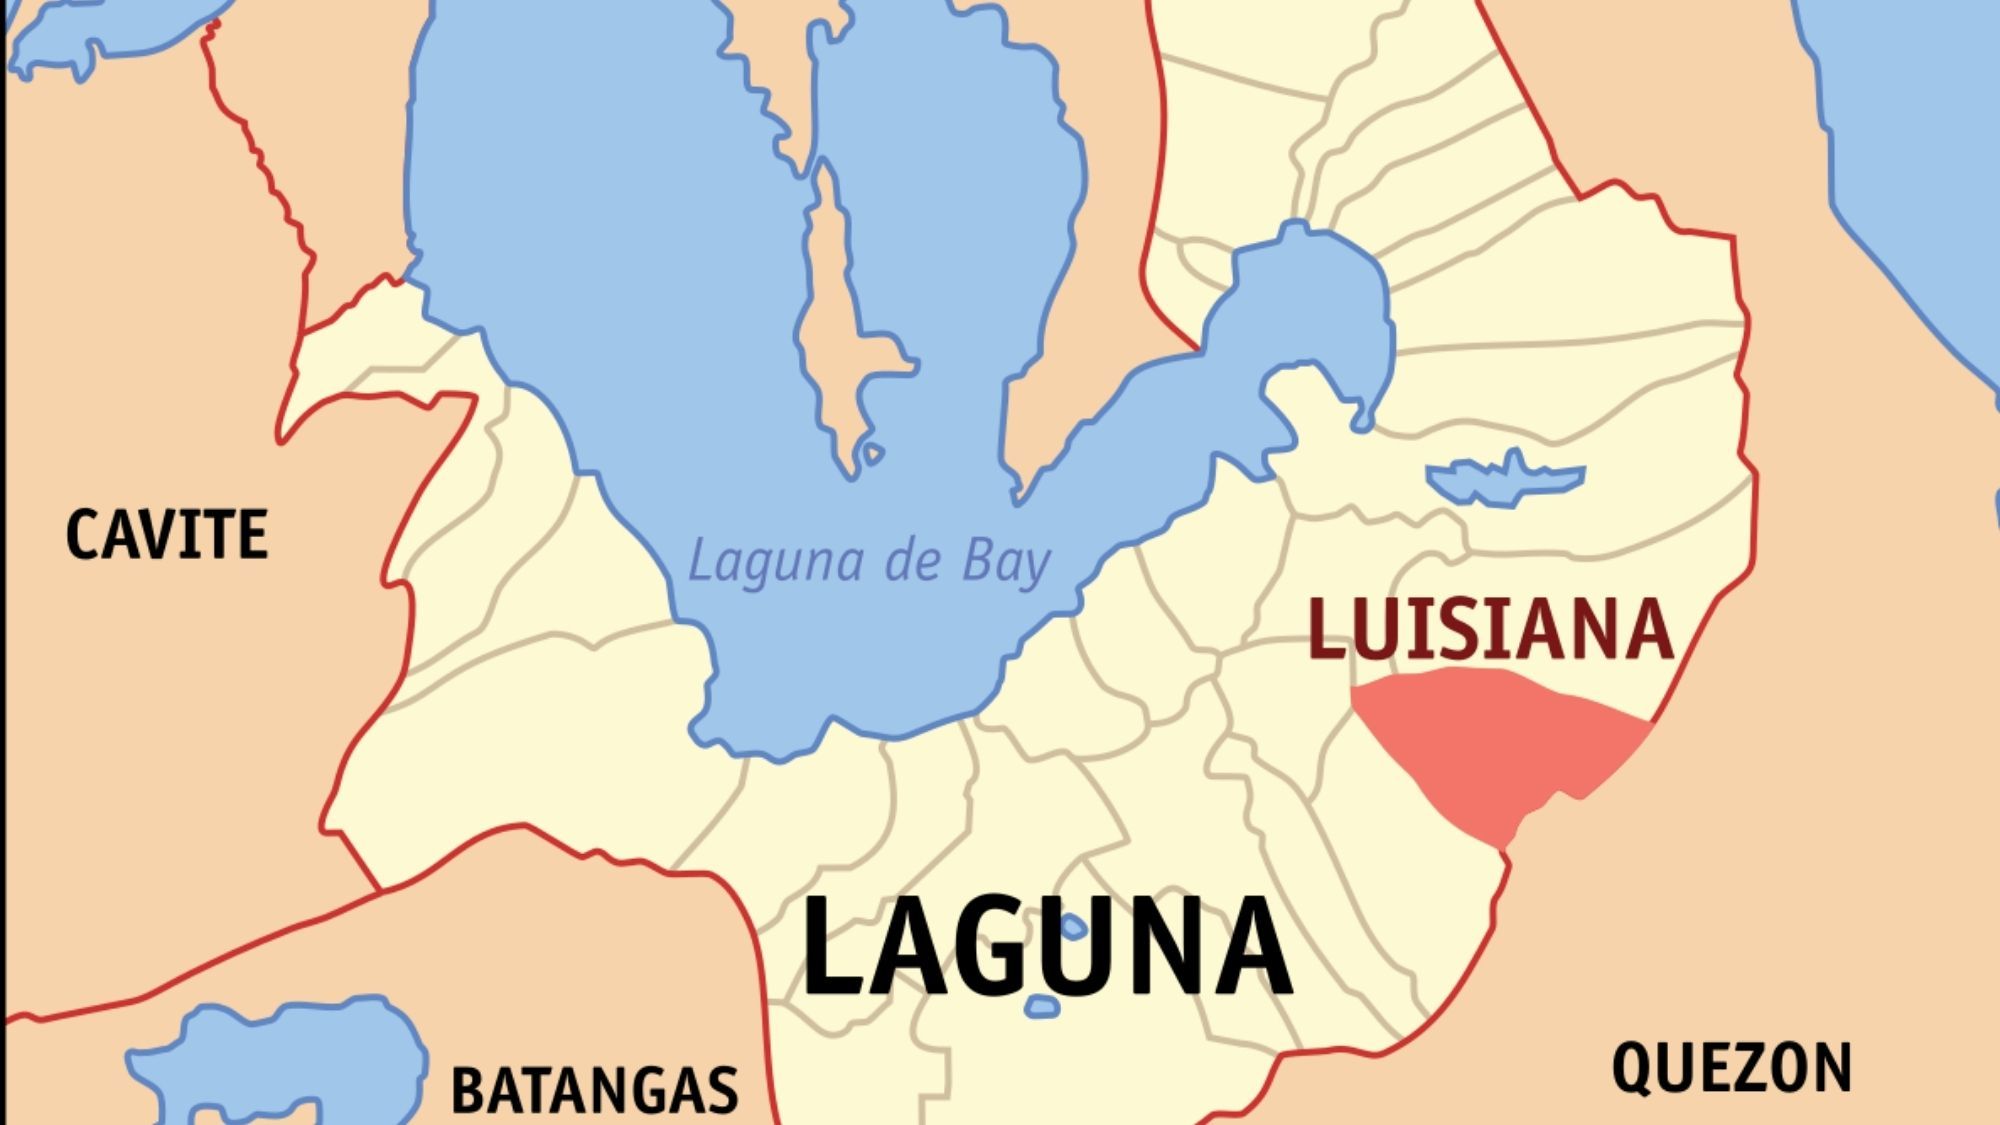 NPA member killed in Laguna clash